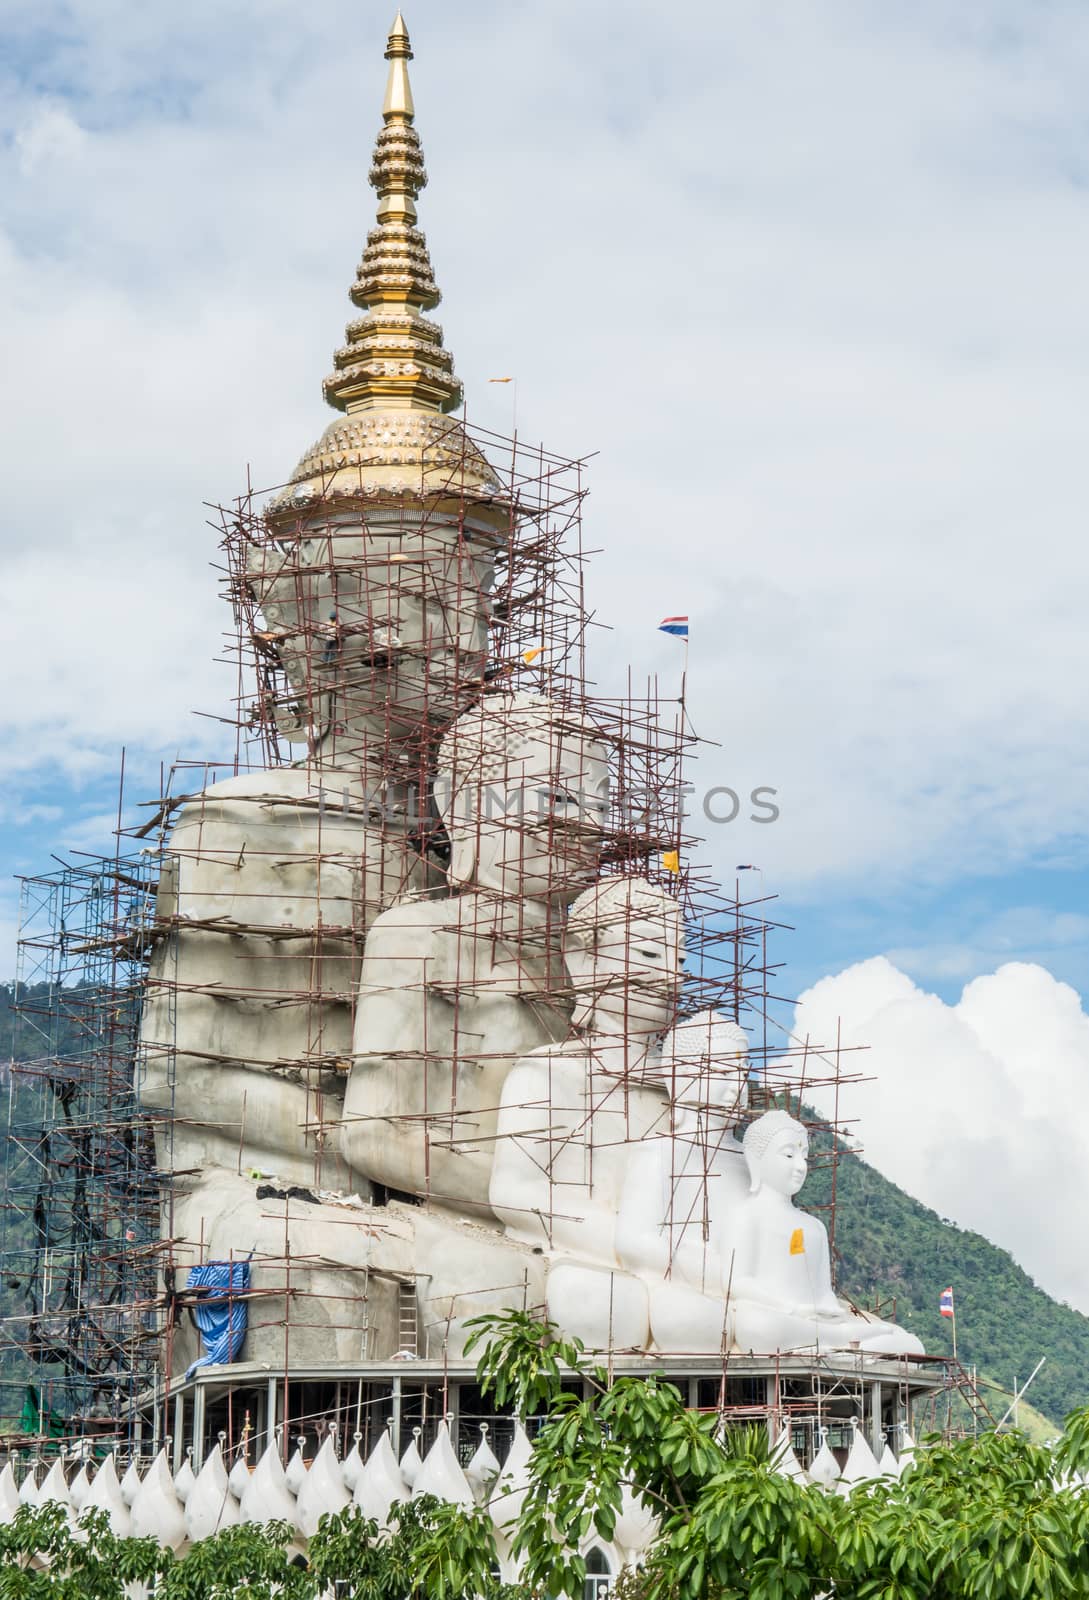 four buddhas sitting waiting to finish the constructing